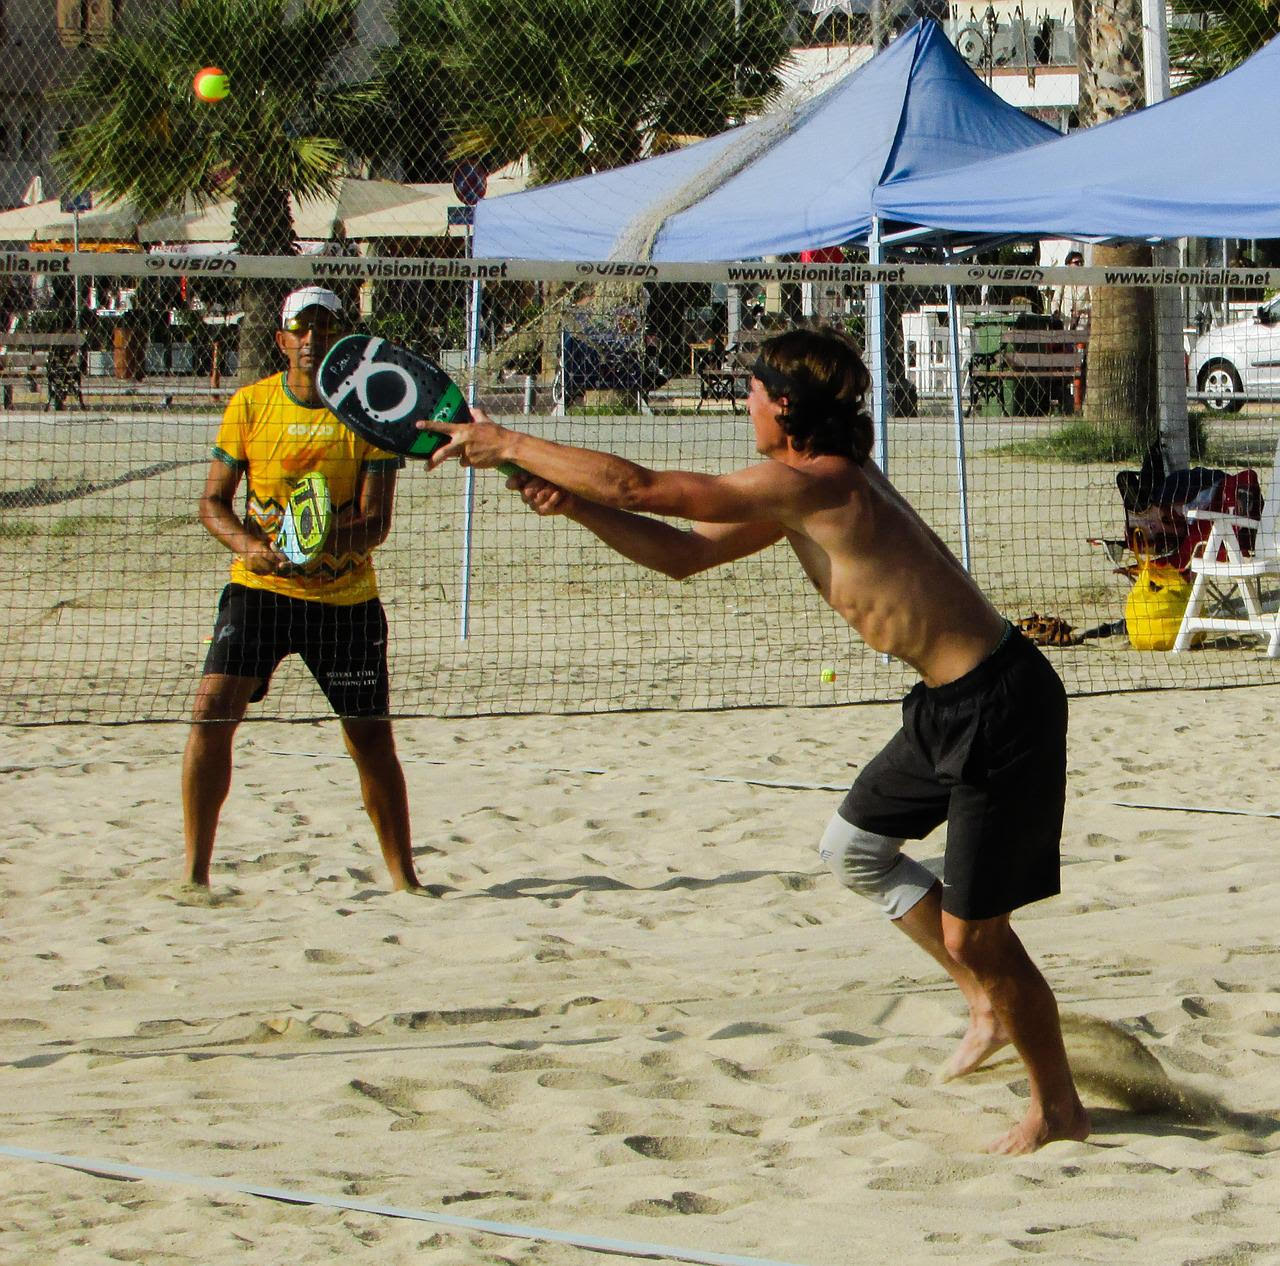 Prática de beach tennis exige preparo físico, diz ortopedista